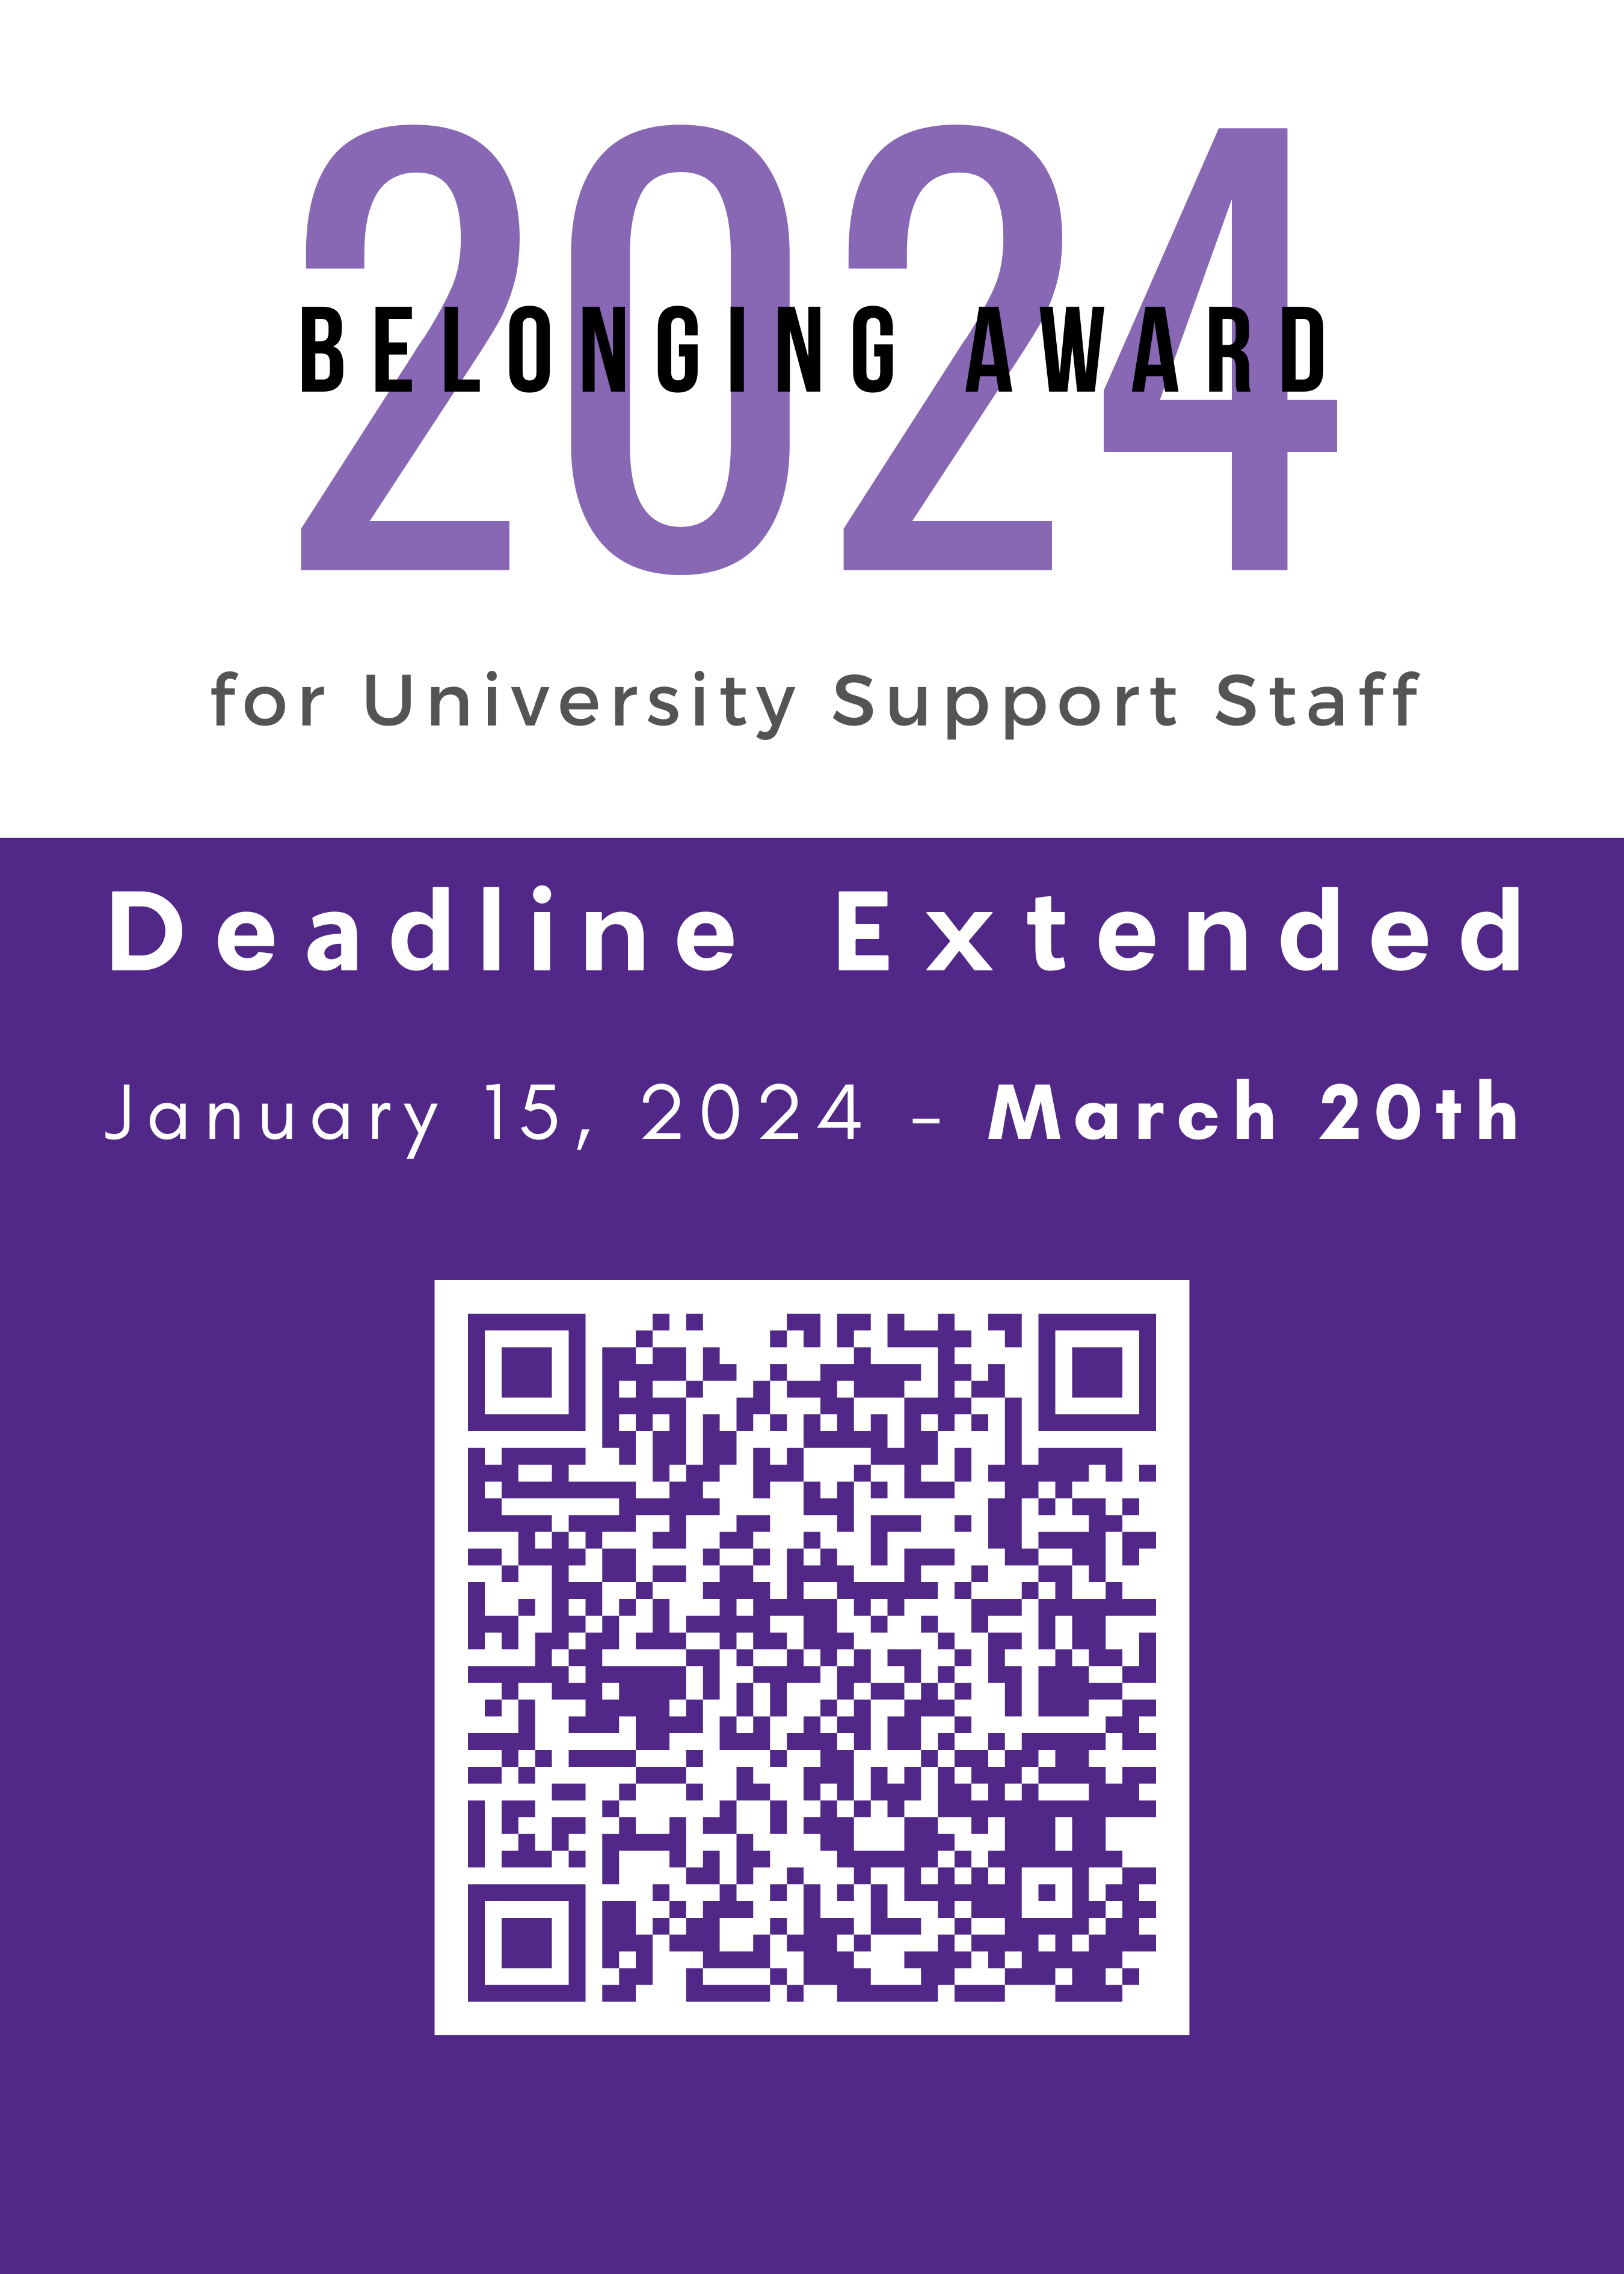 uss belonging award deadline extended